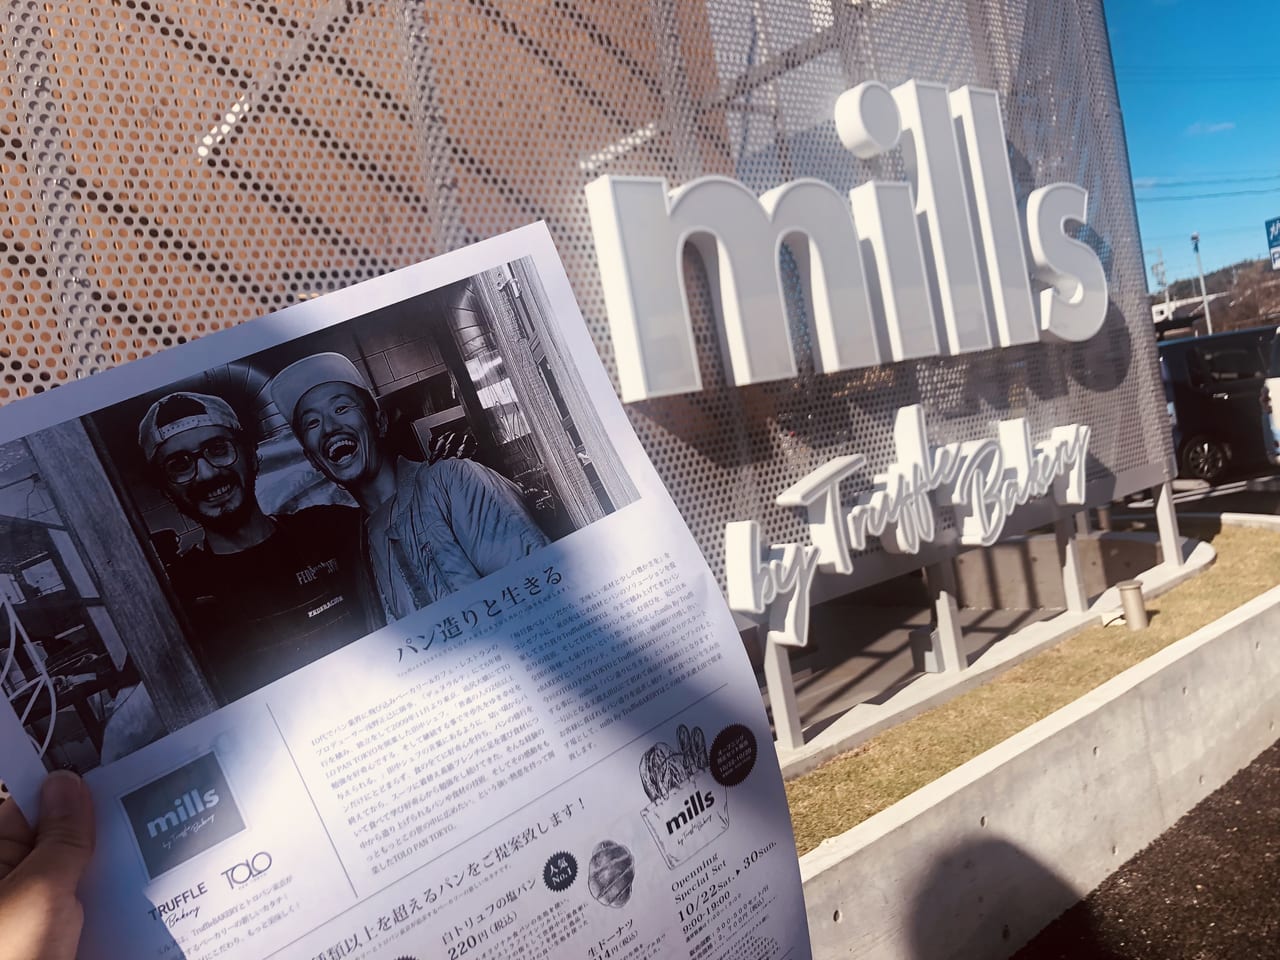 mills